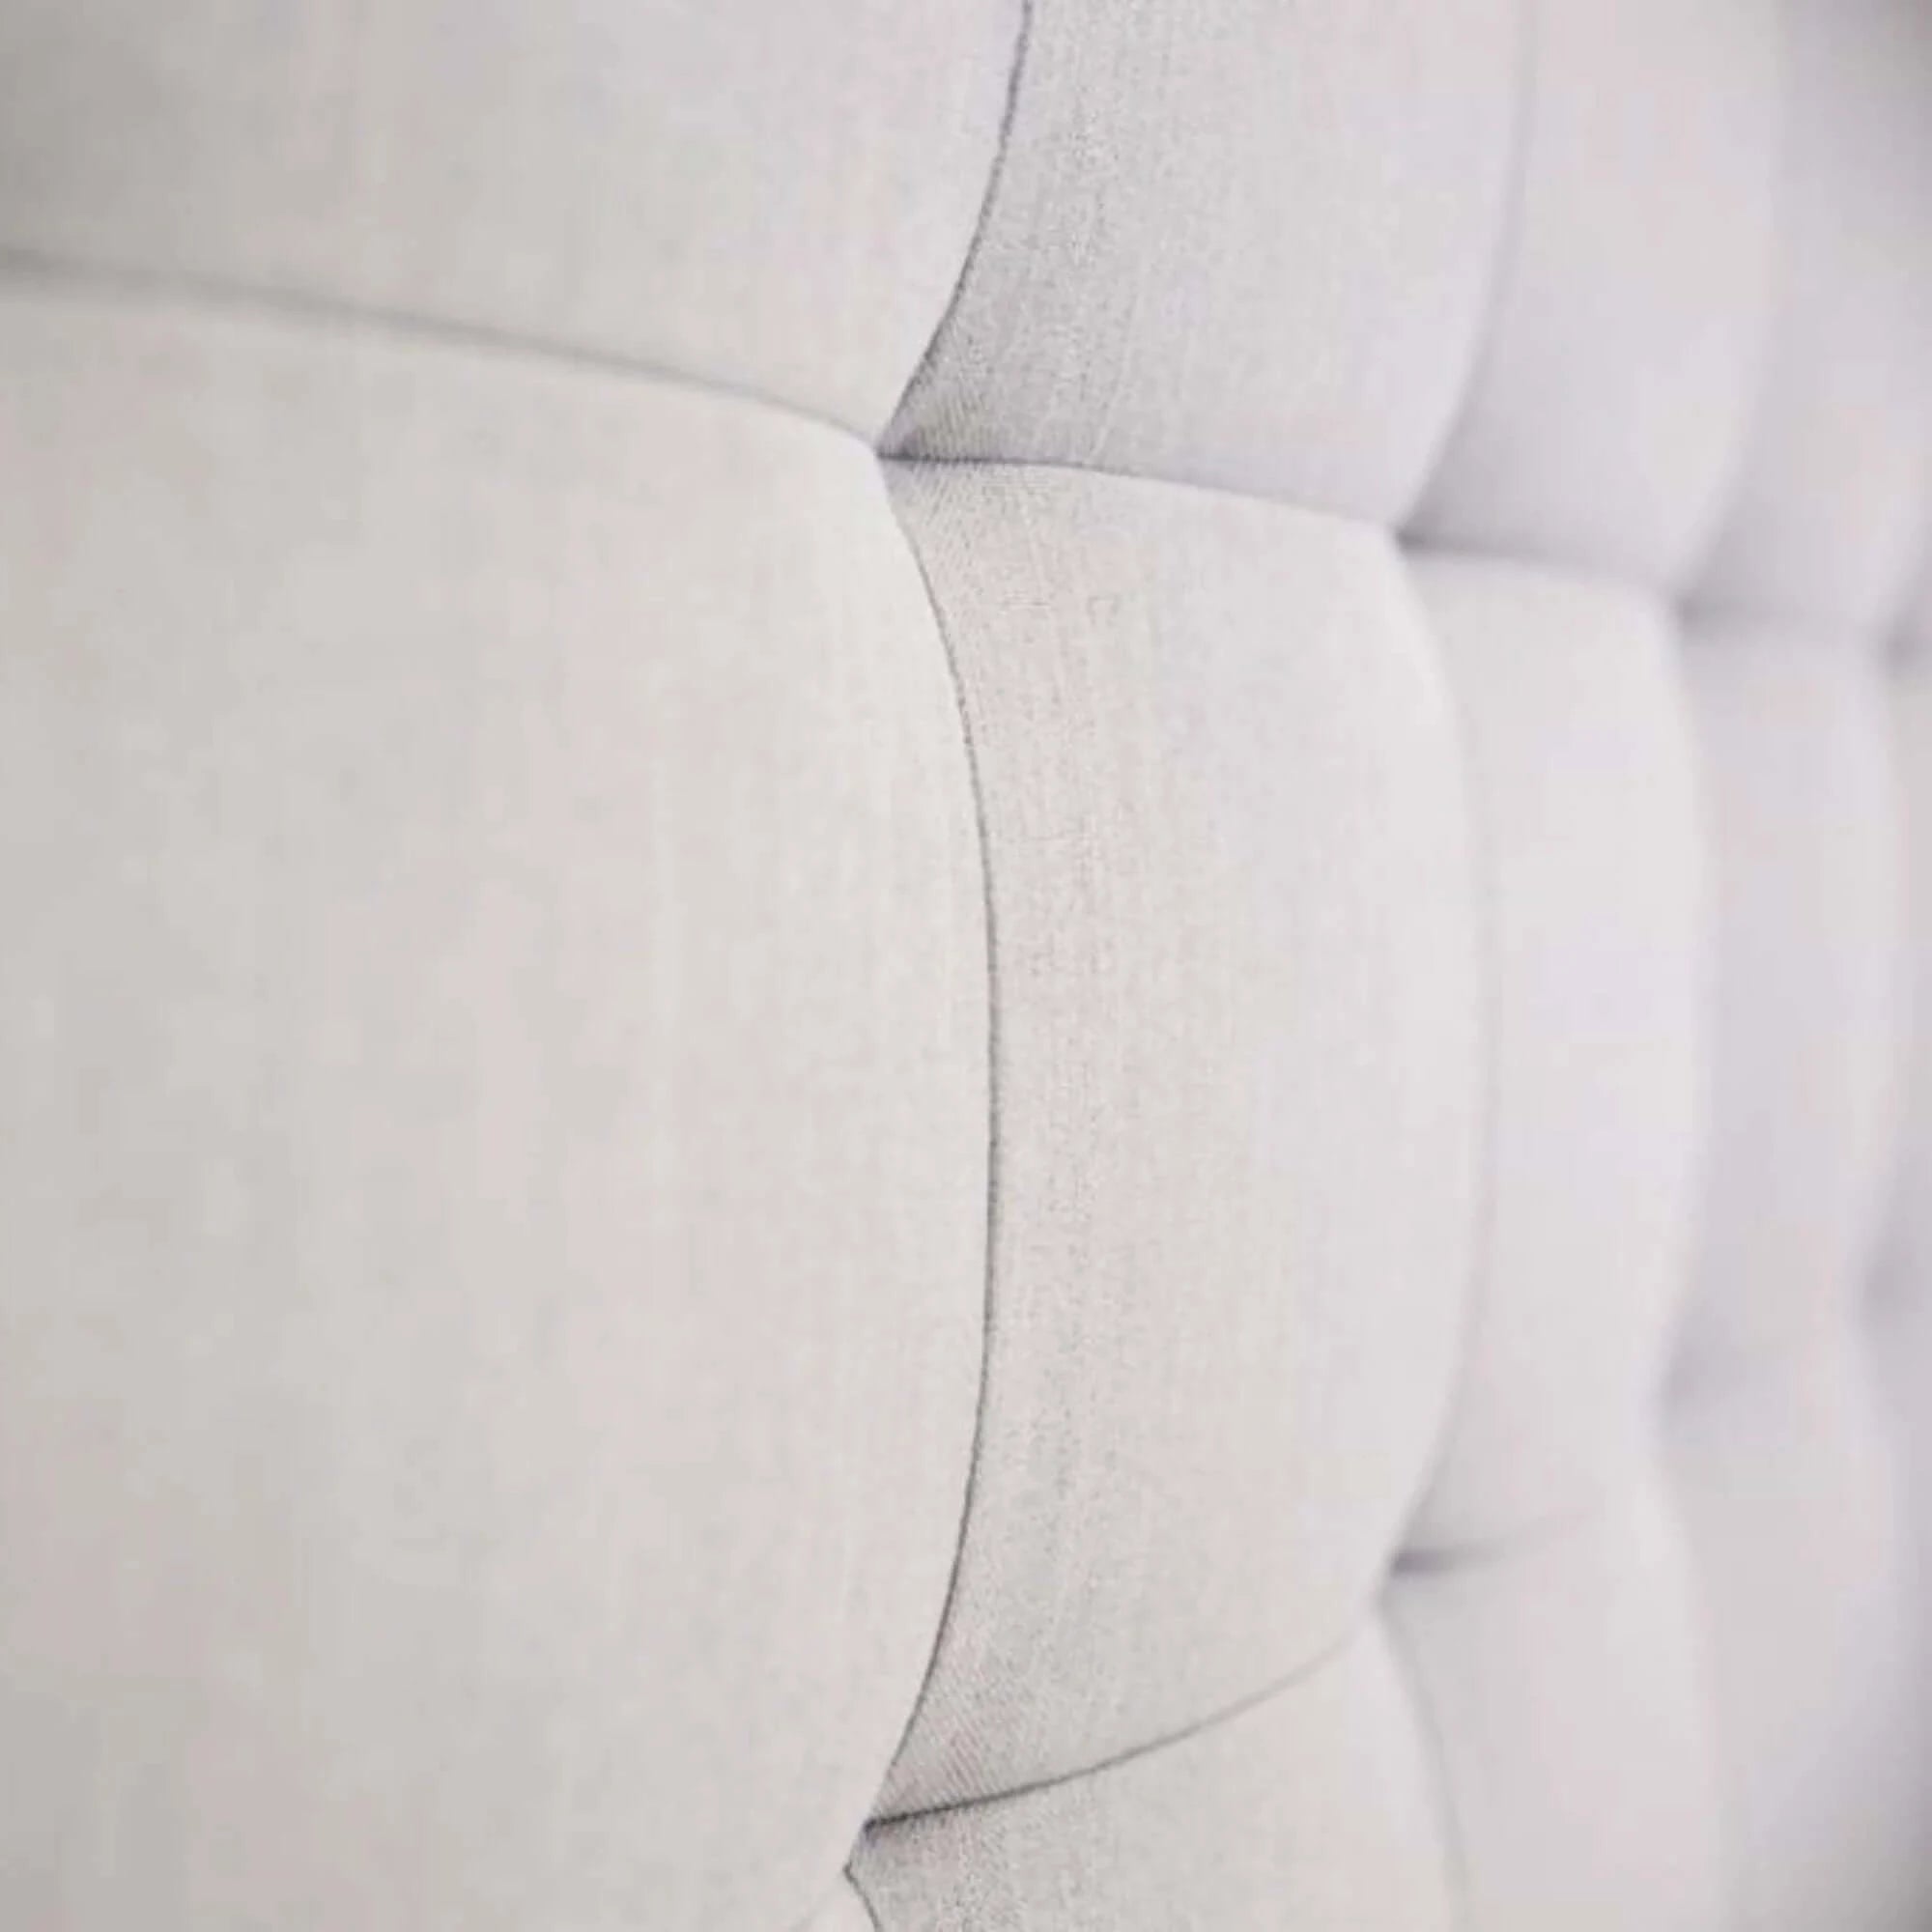 Buy volga queen bed platform frame fabric upholstered mattress base - grey - upinteriors-Upinteriors